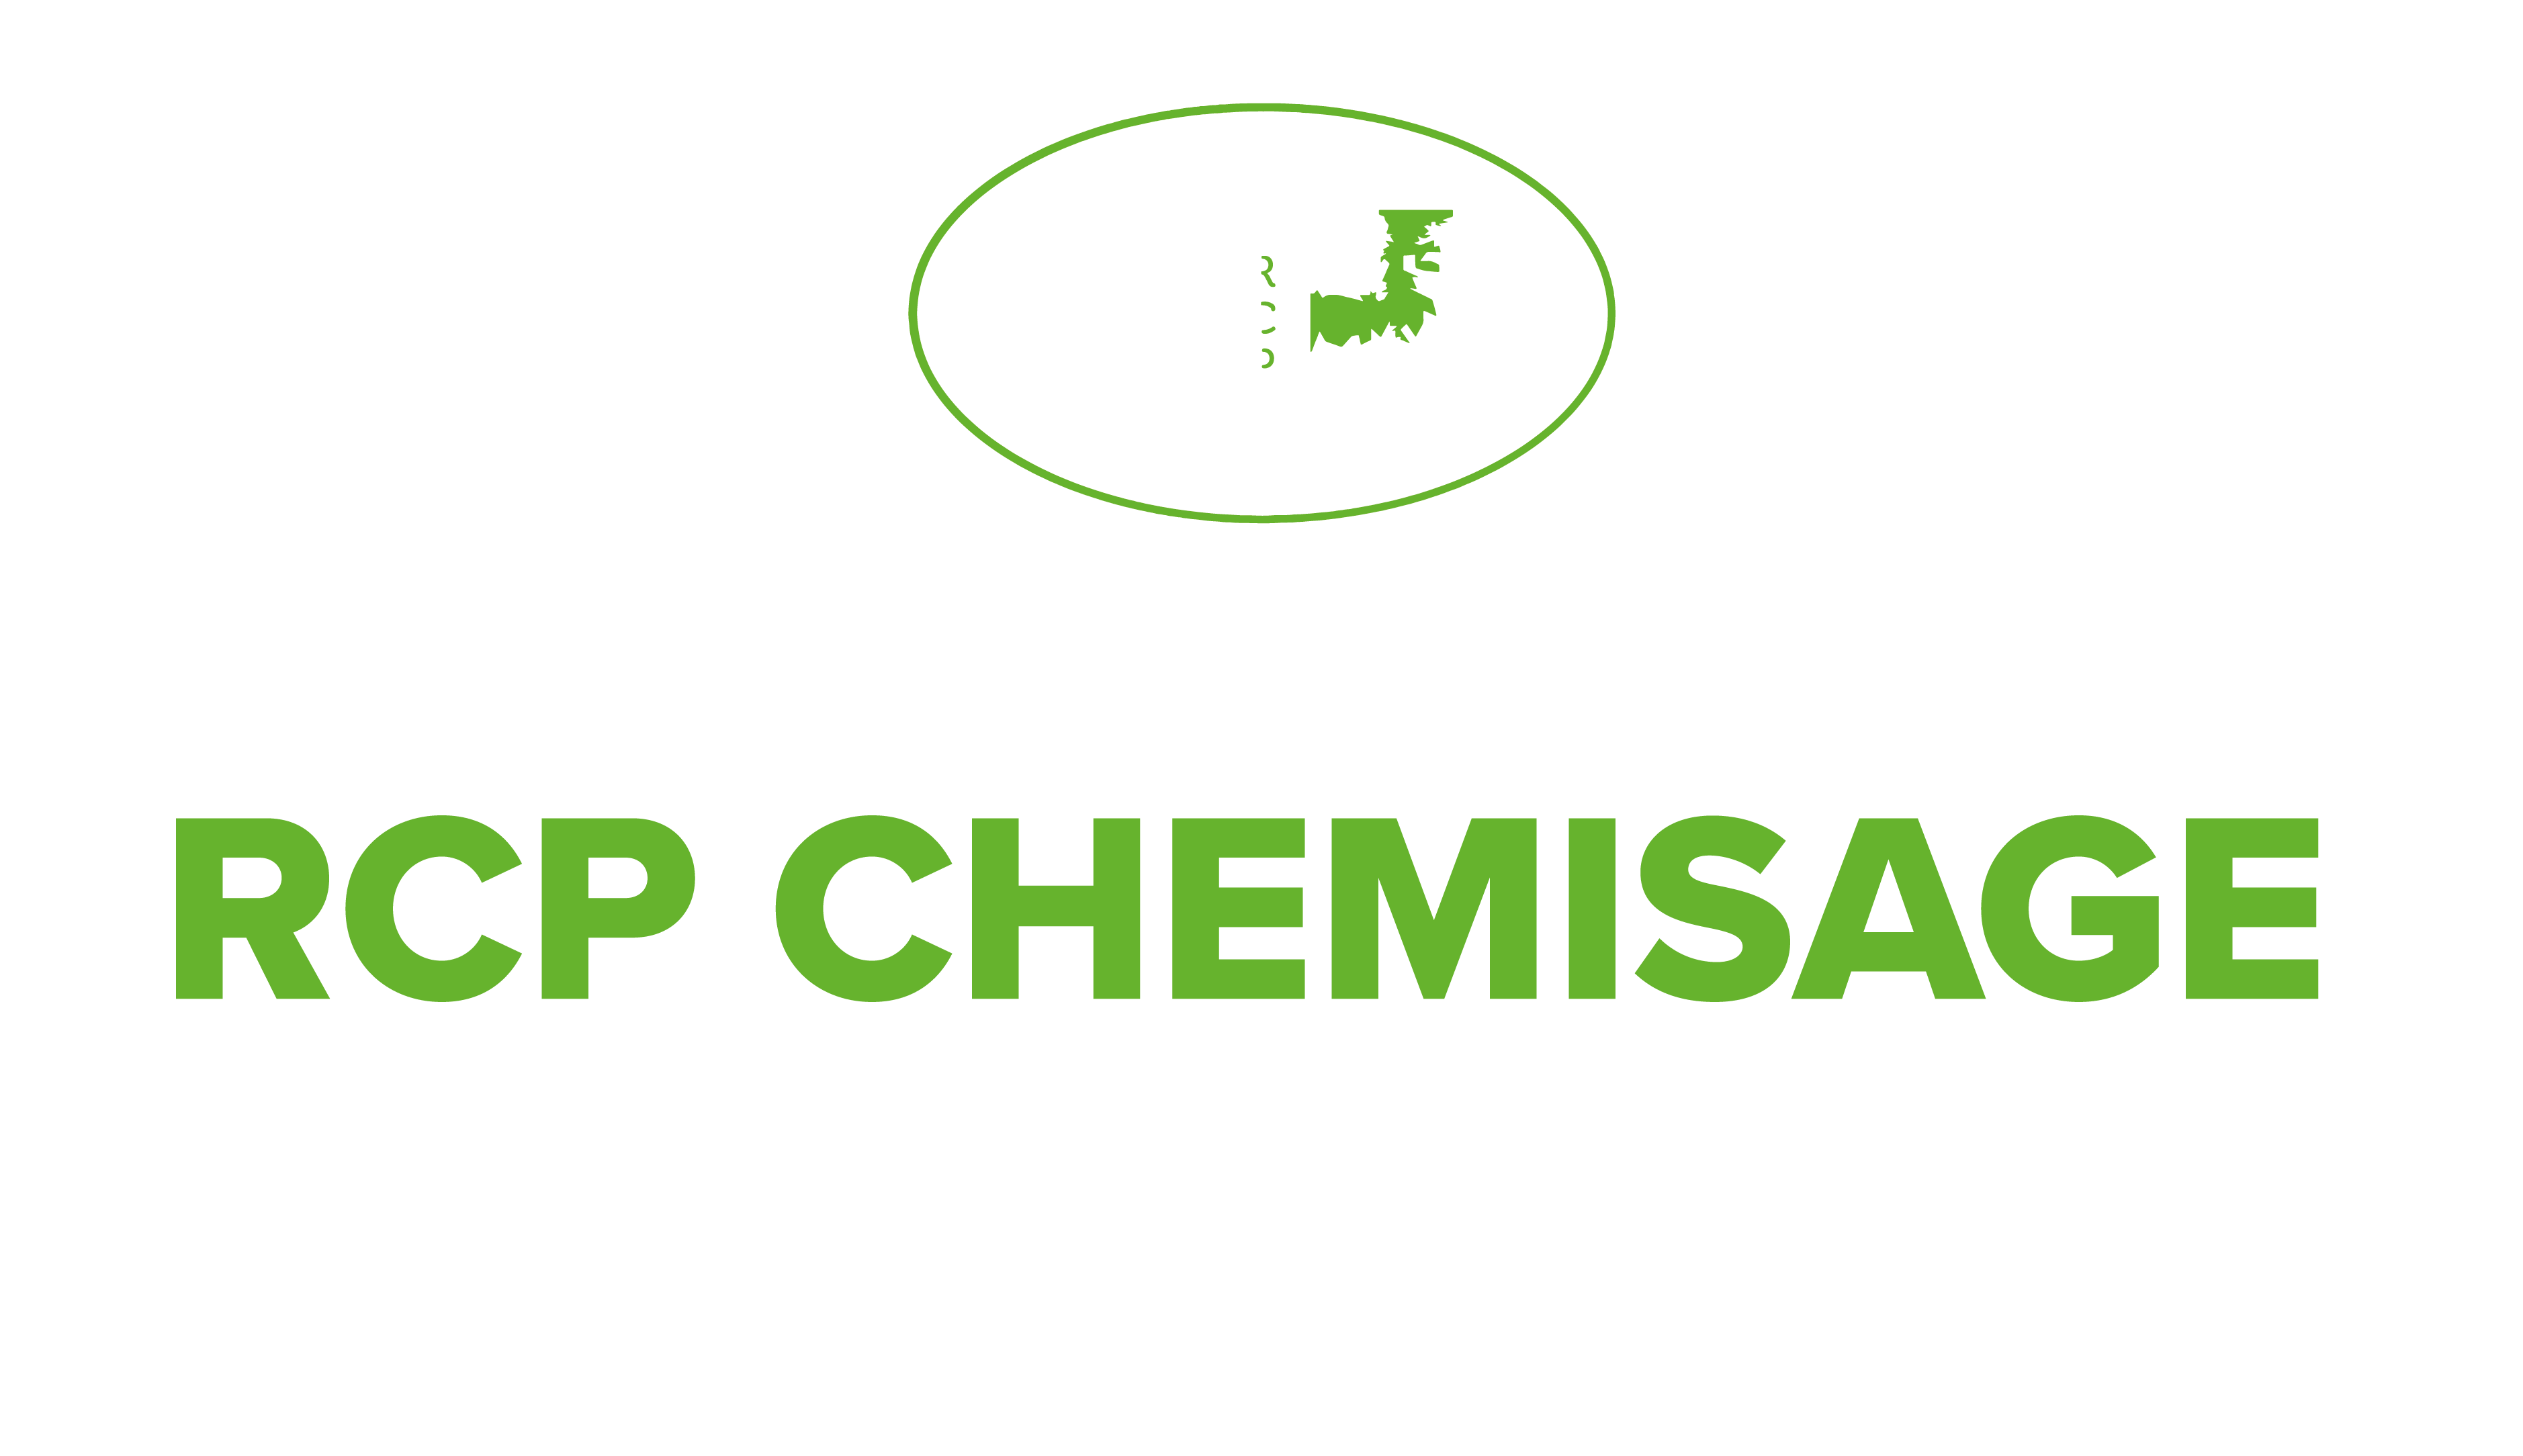 RCP chemisage 10